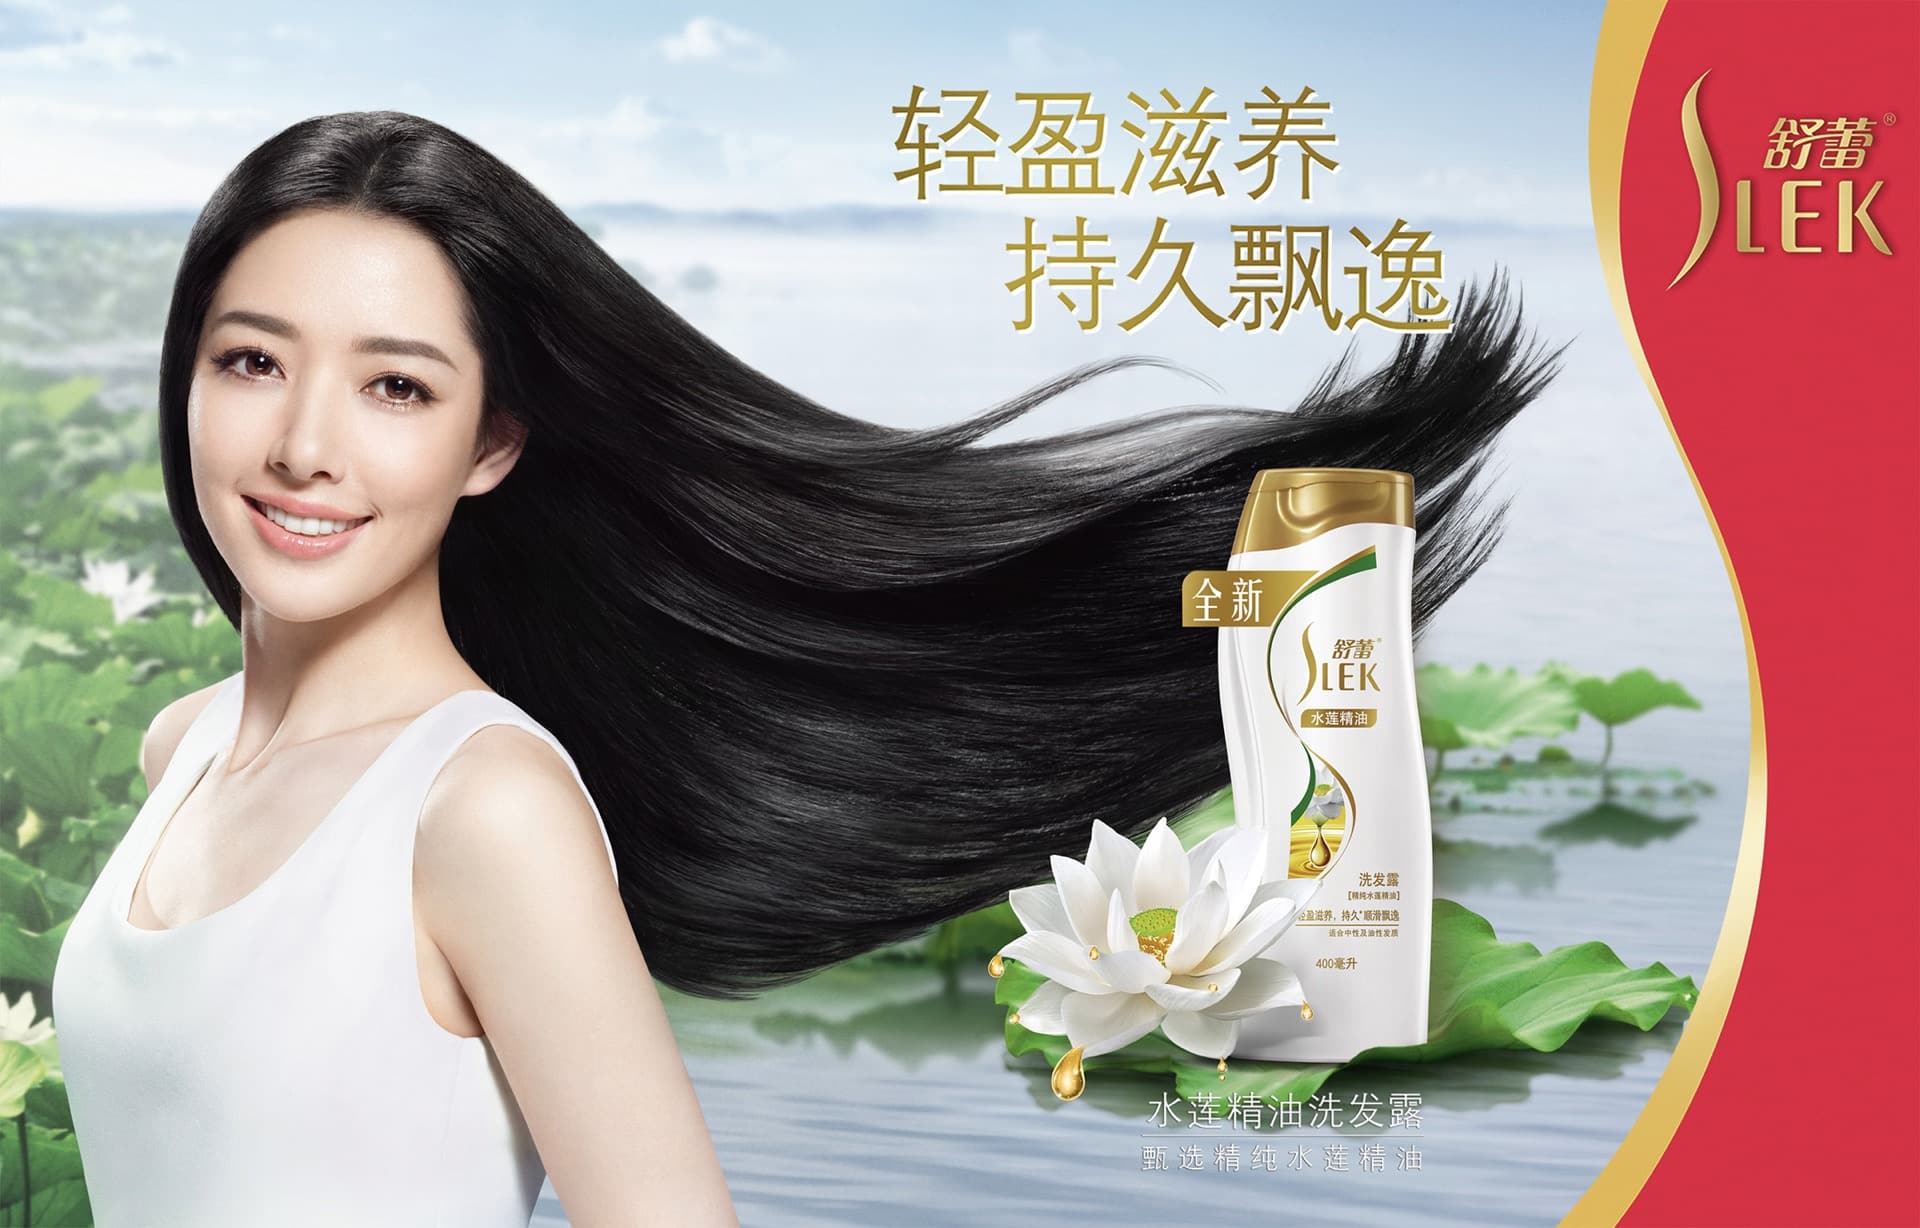 Slek FCB Shanghai Retouching External Hair Beauty Dec 2015 HFCN 07 KV